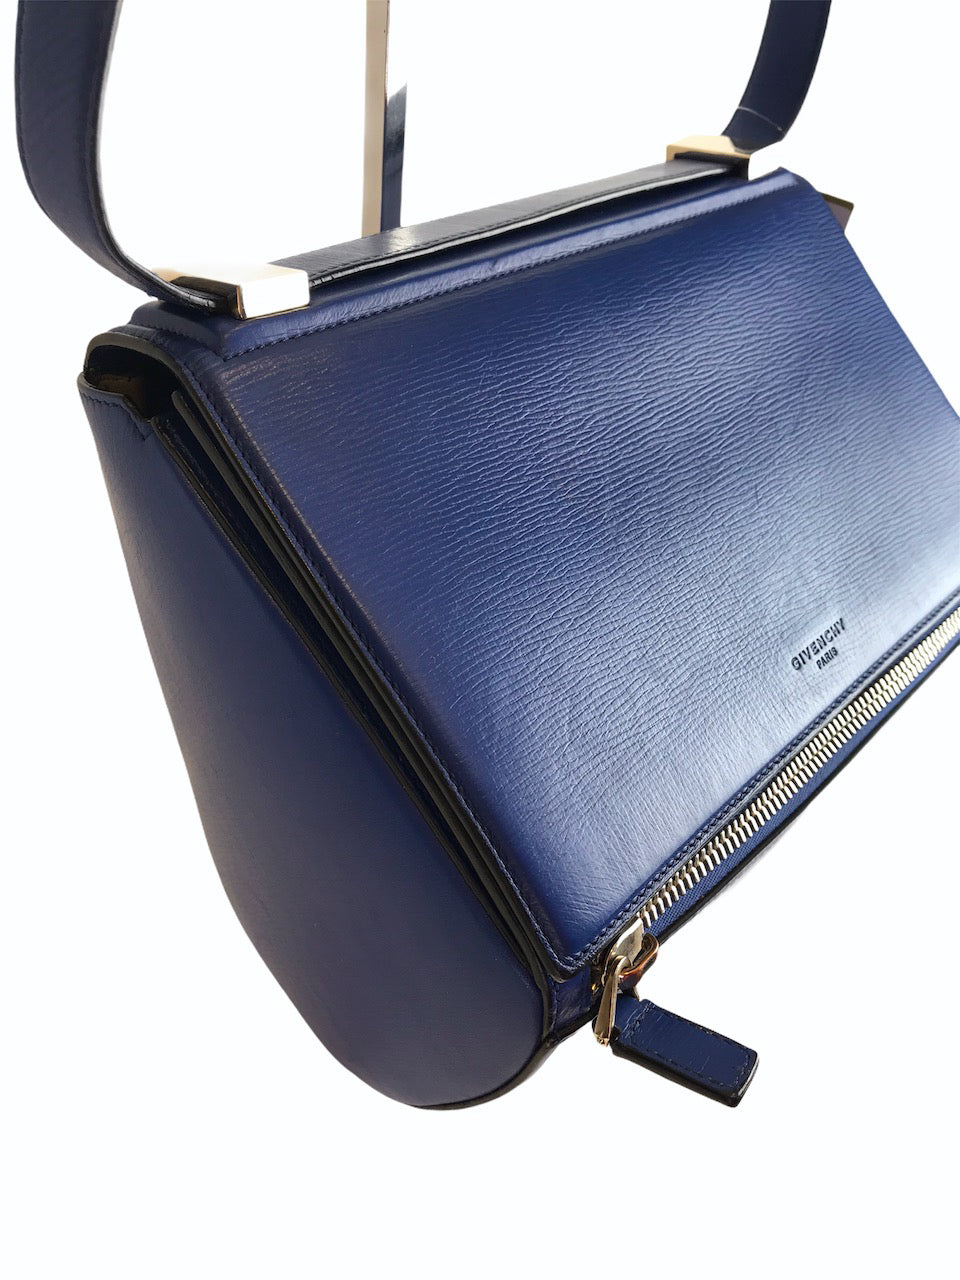 Givenchy Blue Leather Pandora Crossbody- As Seen On Instagram 09/09/2020 - Siopaella Designer Exchange